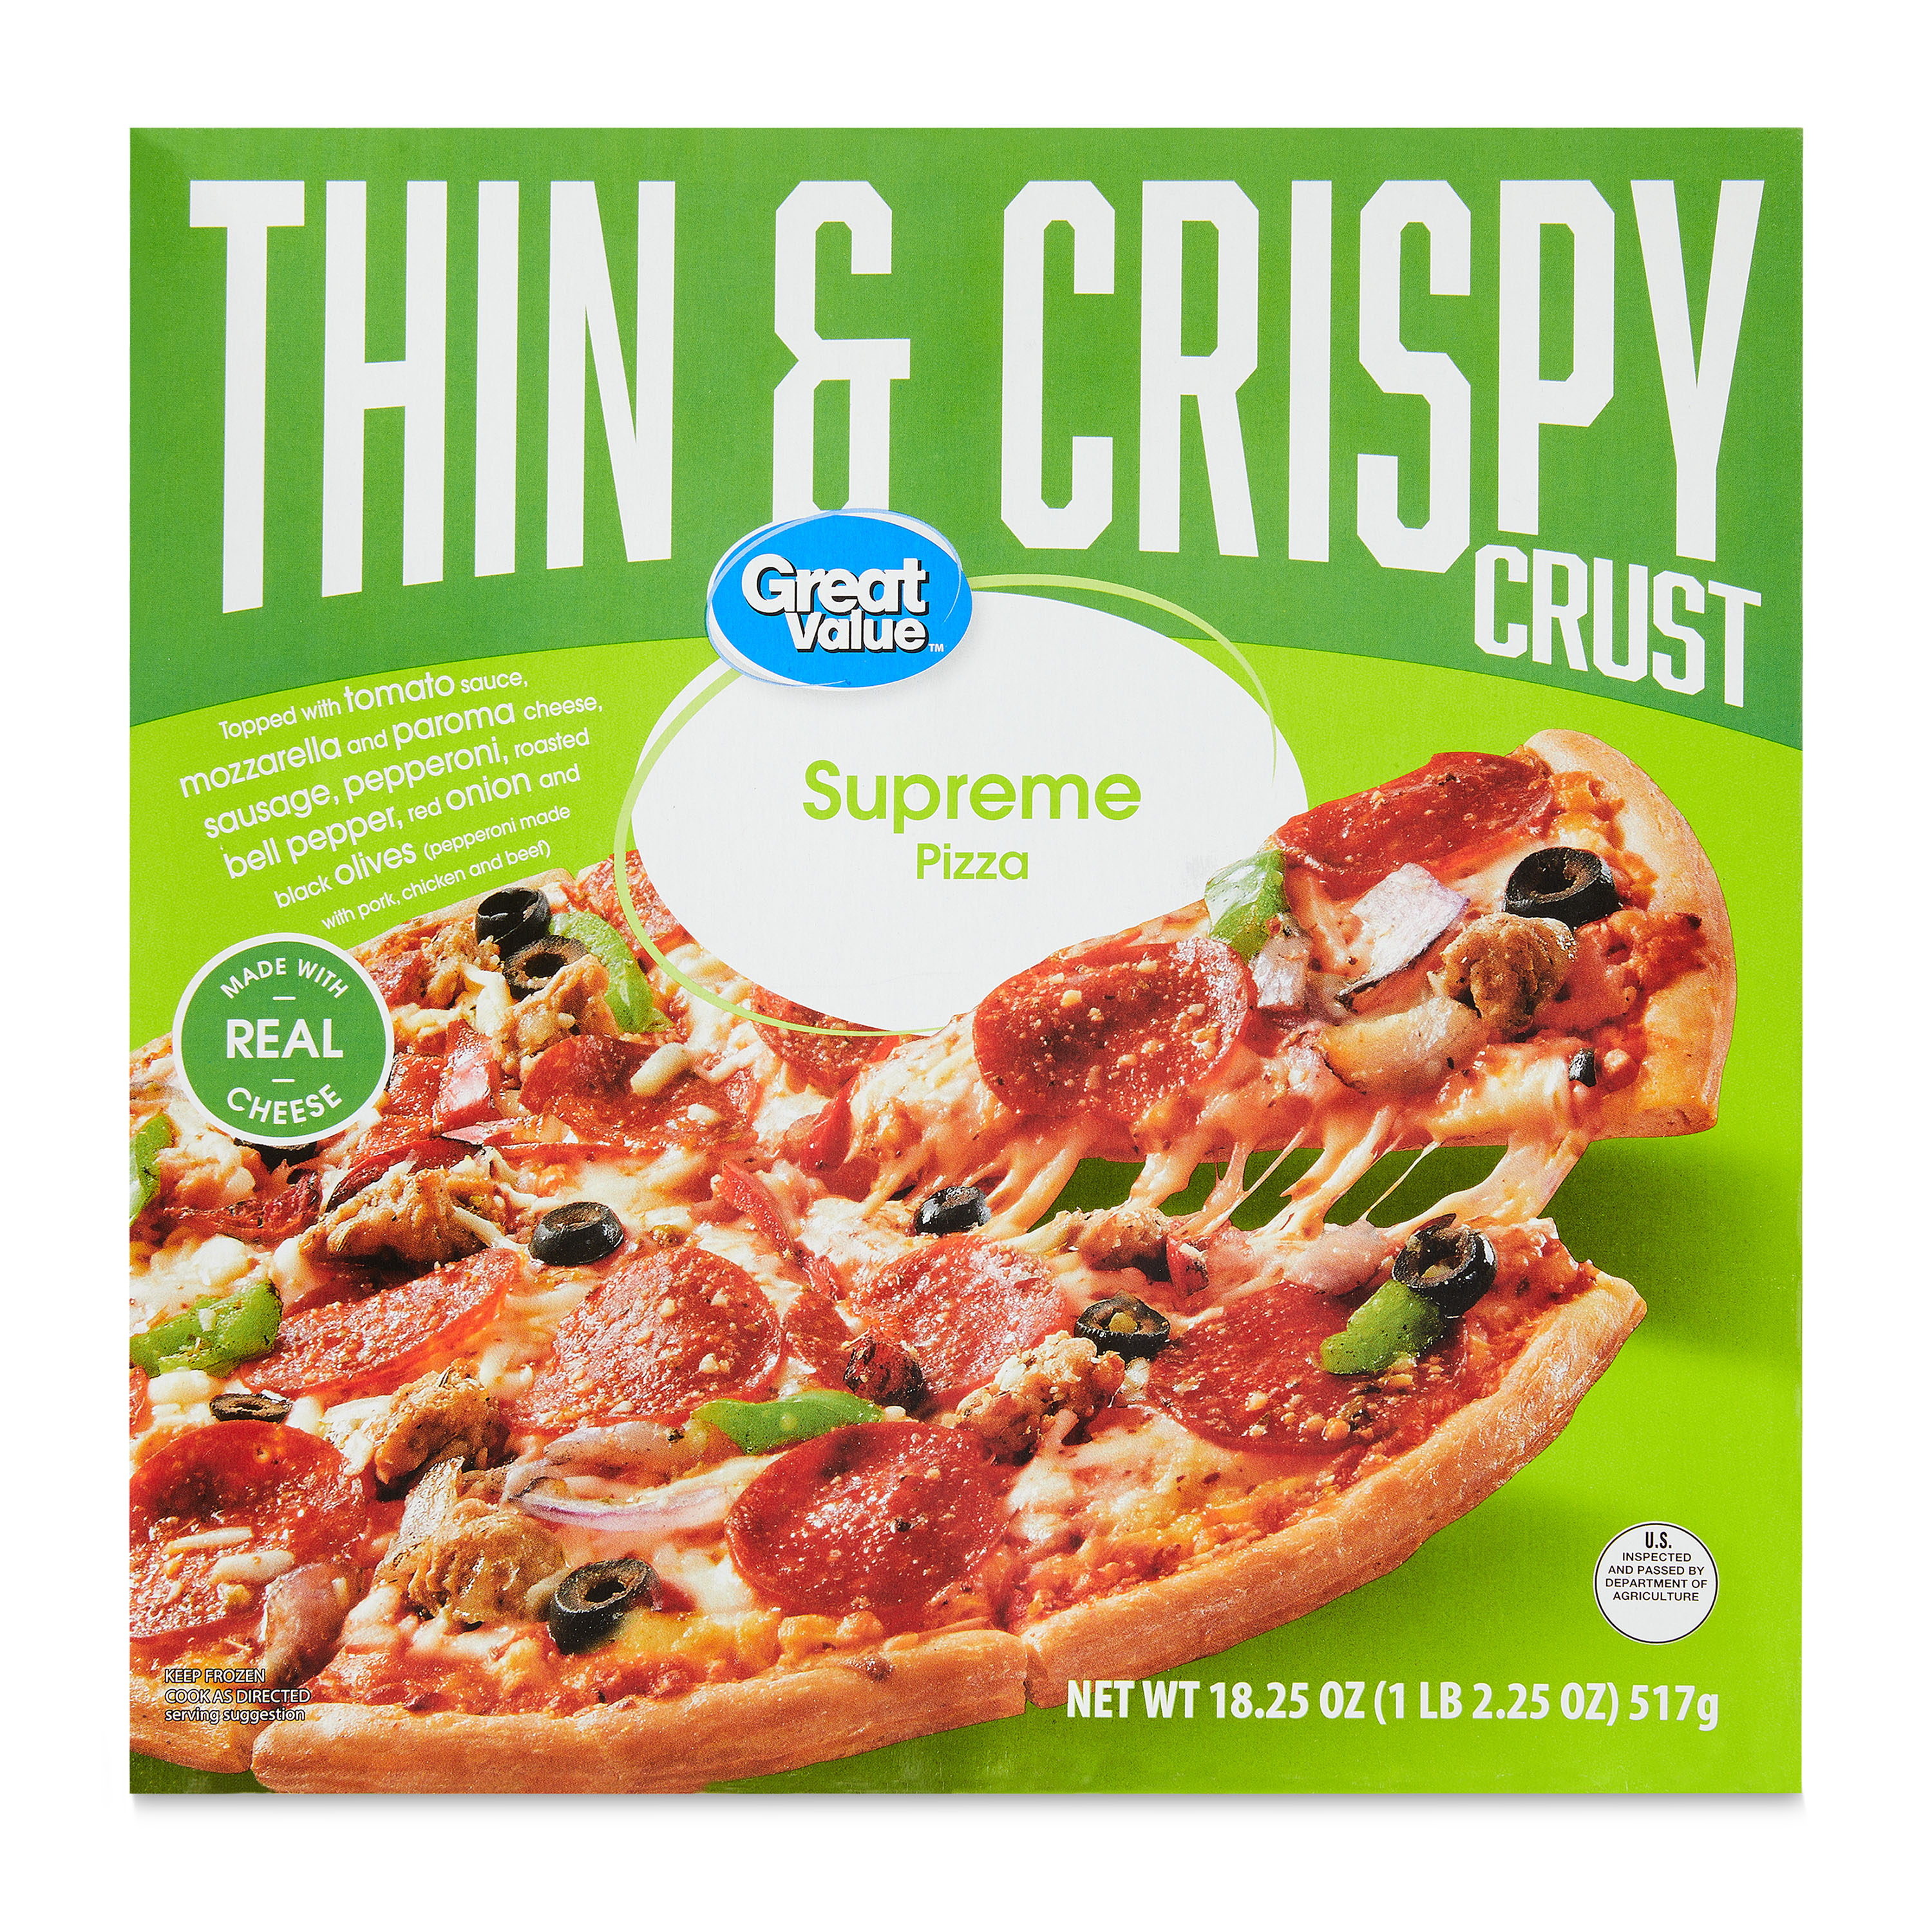 Great Value Thin Crust Supreme Pizza, Tomato Basil Garlic Sauce, 18.25 oz (Frozen) - image 1 of 8